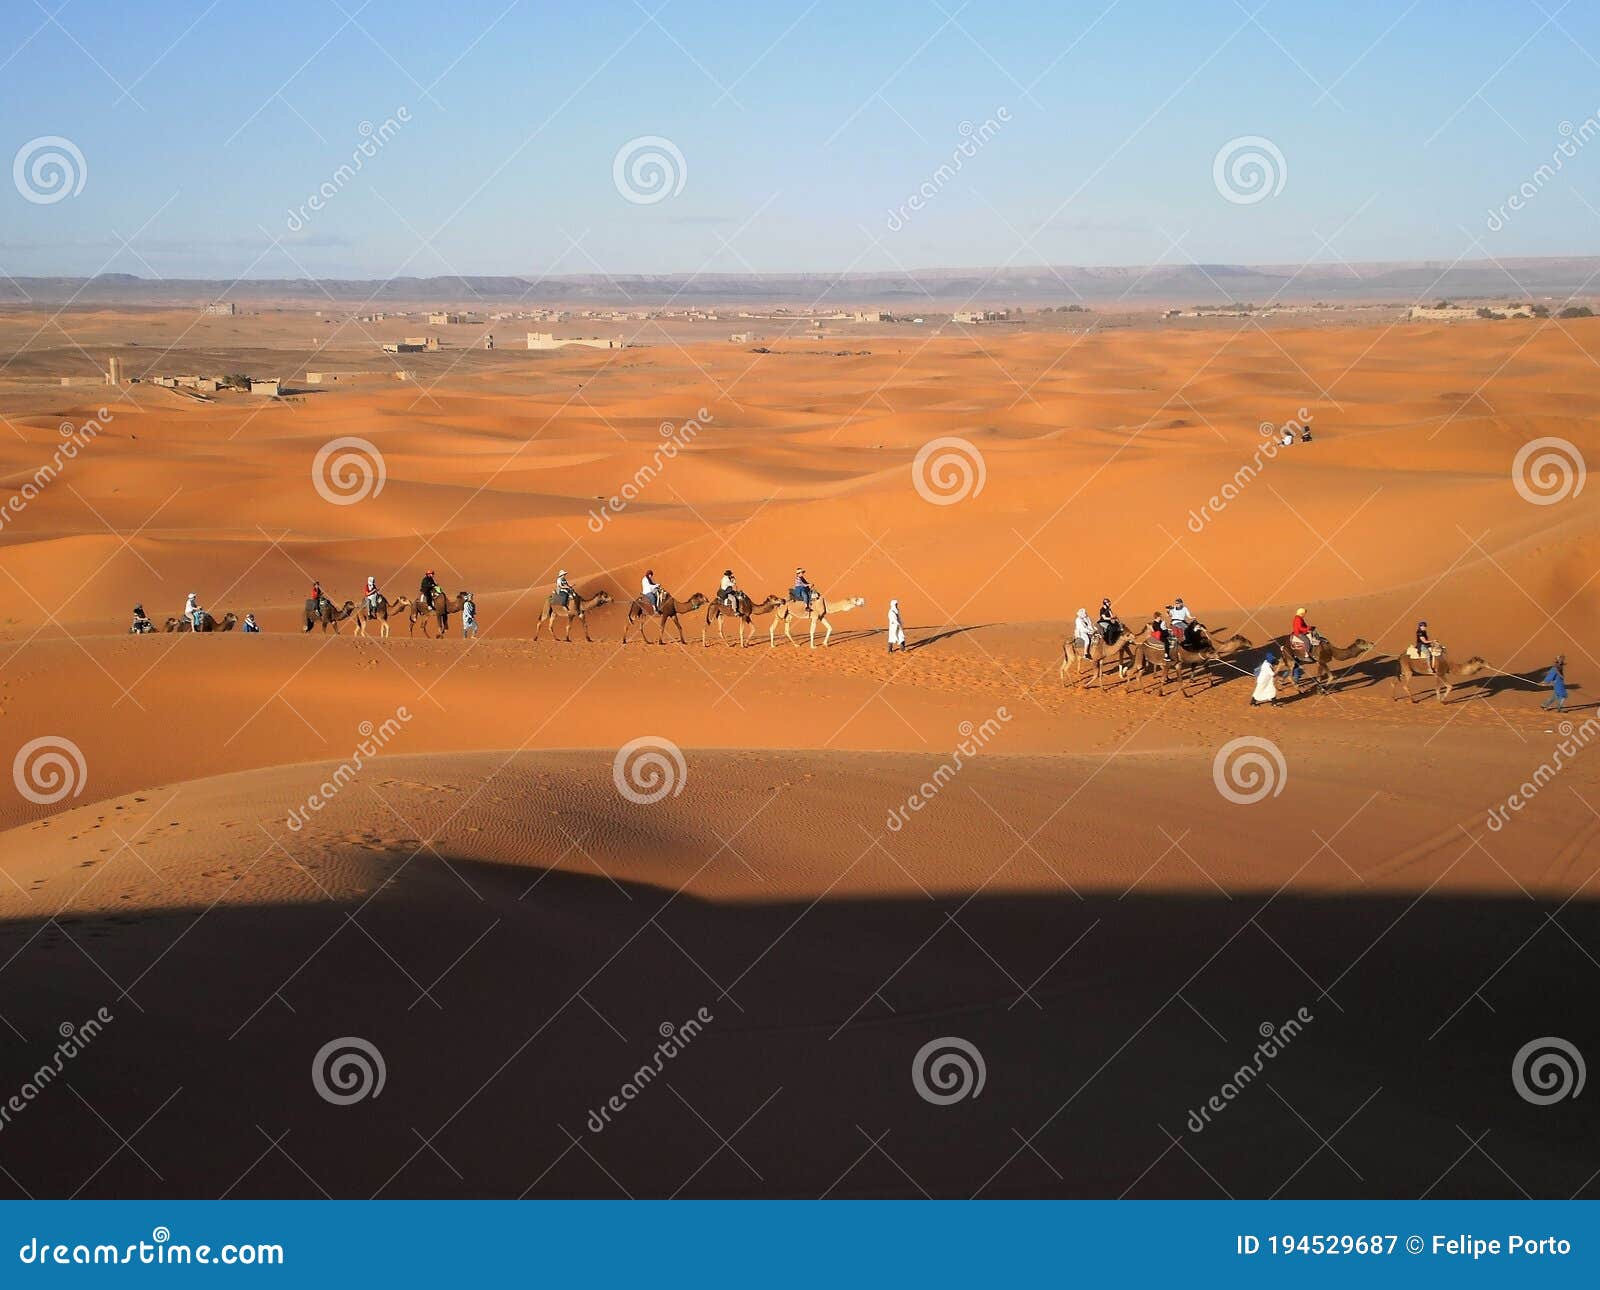 group of tourist in saara desert, morocco